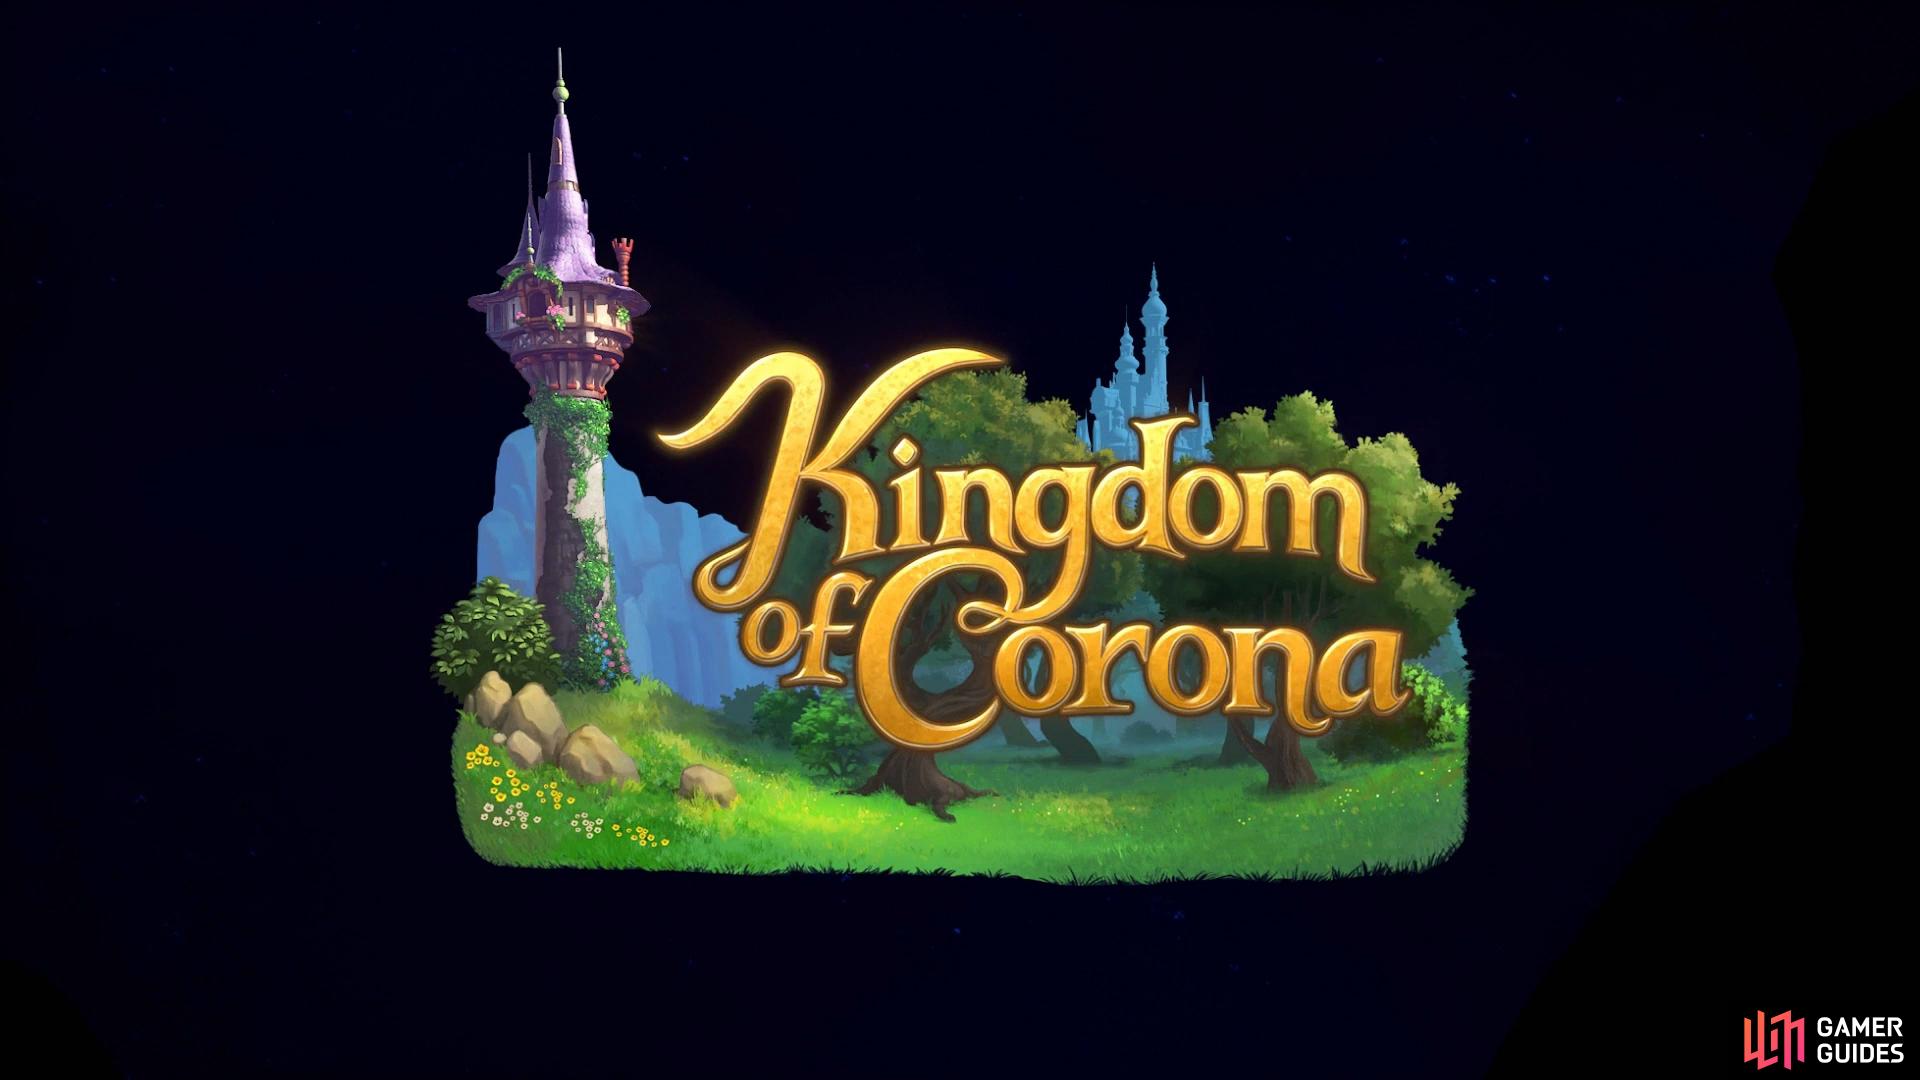 Kingdom Come: Deliverance Screenshot